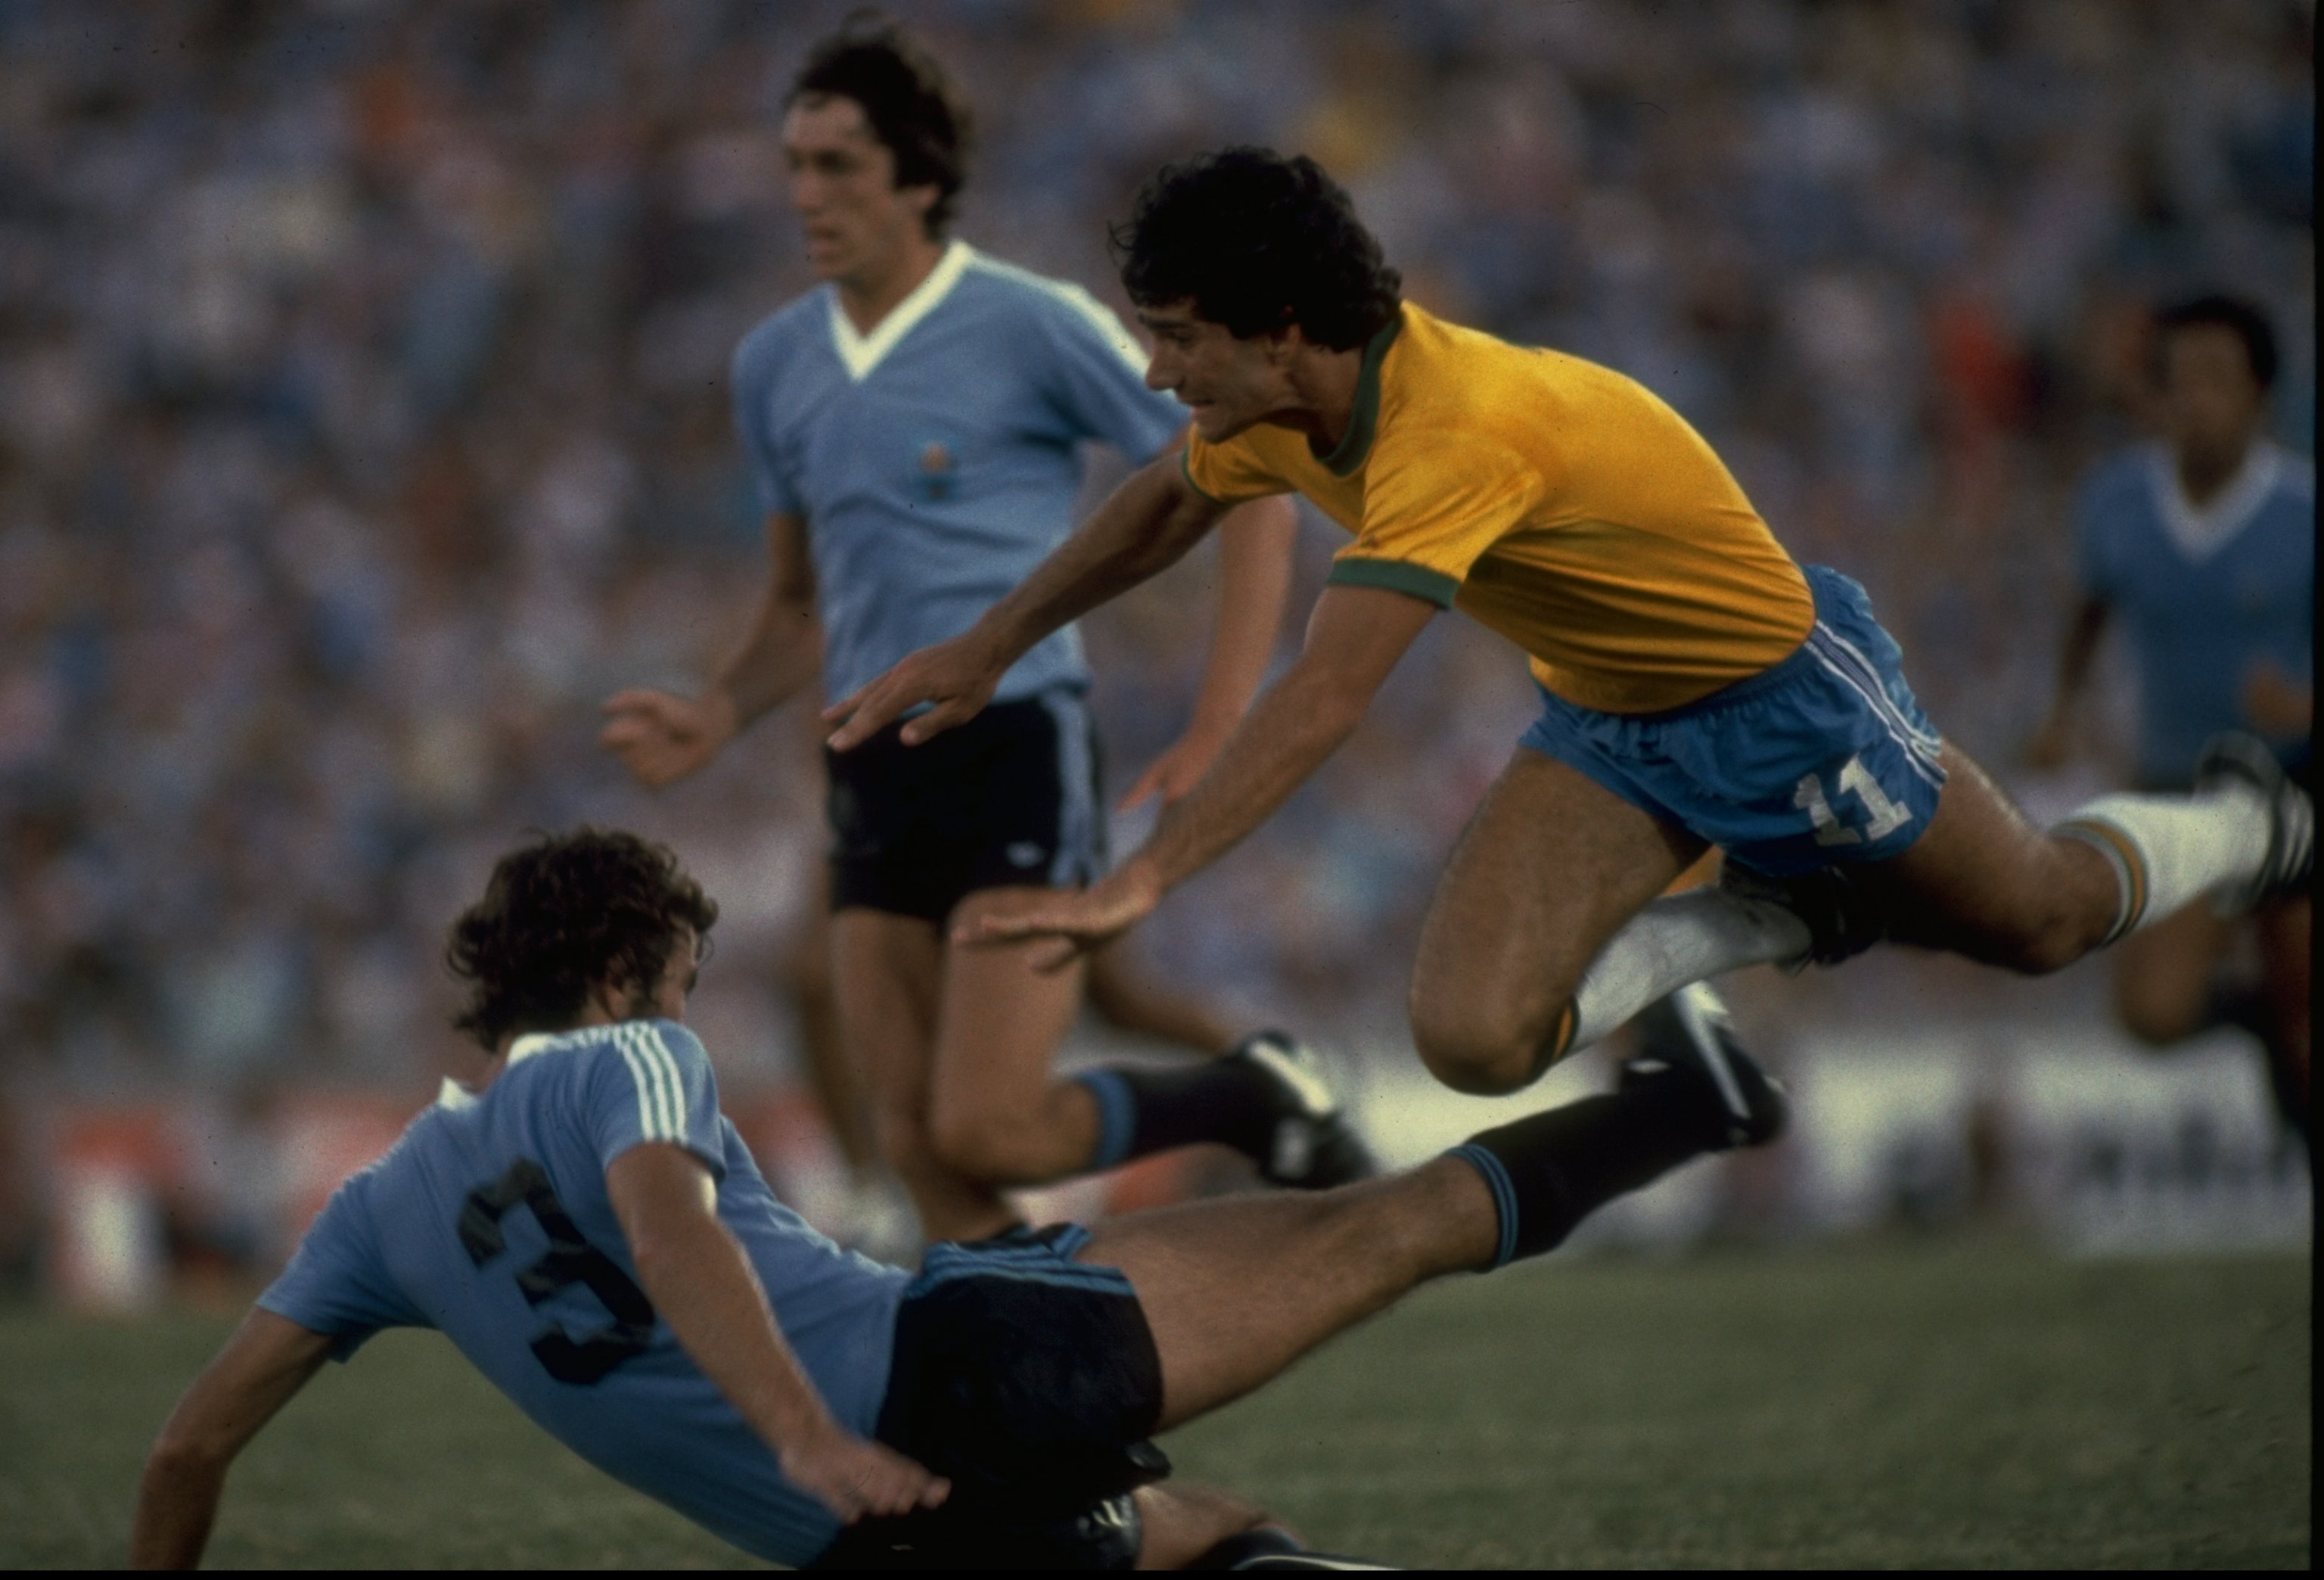 Sport360 - Apart from Messi and Ronaldo, Pele lists 10 other players he  ranks among the best ever 😎 Maradona 🇦🇷 Di Stefano 🇦🇷 Garrincha 🇧🇷  Cruyff 🇳🇱 Becke